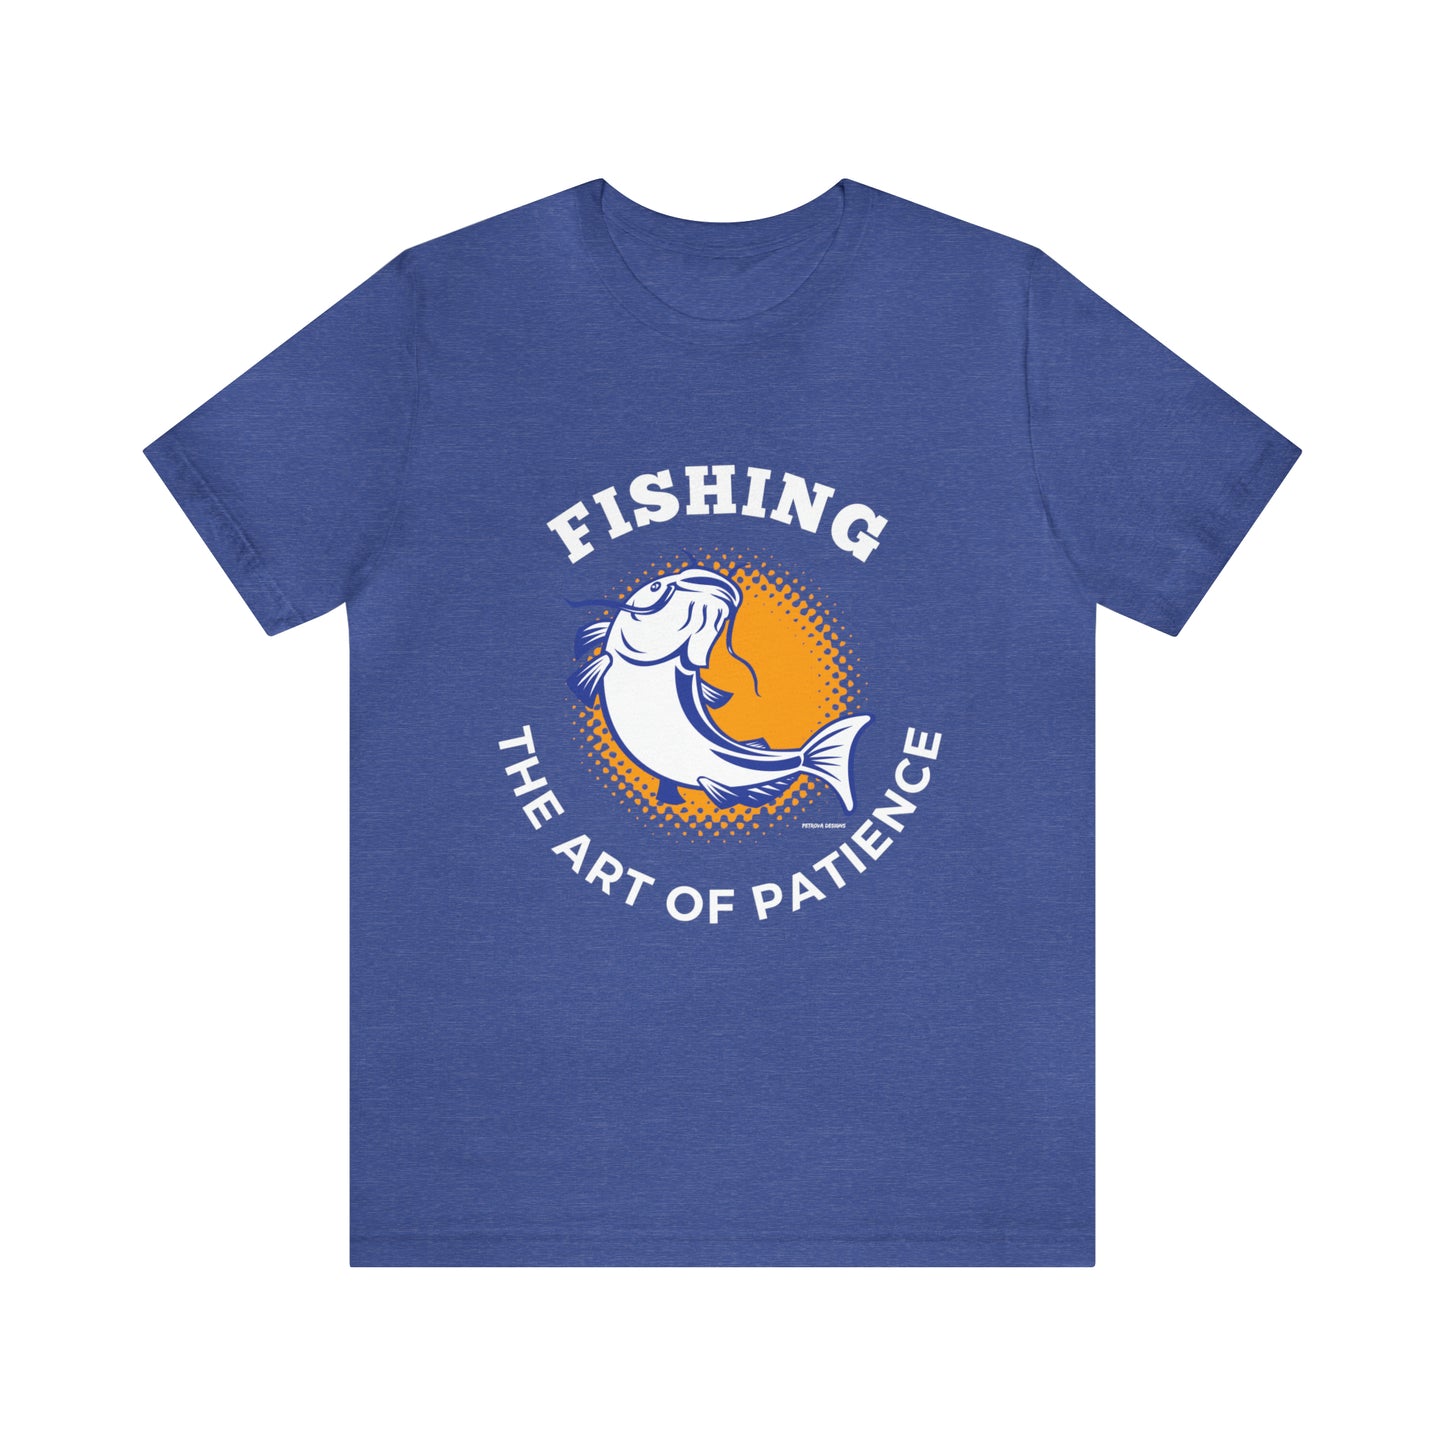 Heather True Royal T-Shirt Tshirt Design Gift for Friend and Family Short Sleeved Shirt Fishing Hobby Aesthetic Petrova Designs